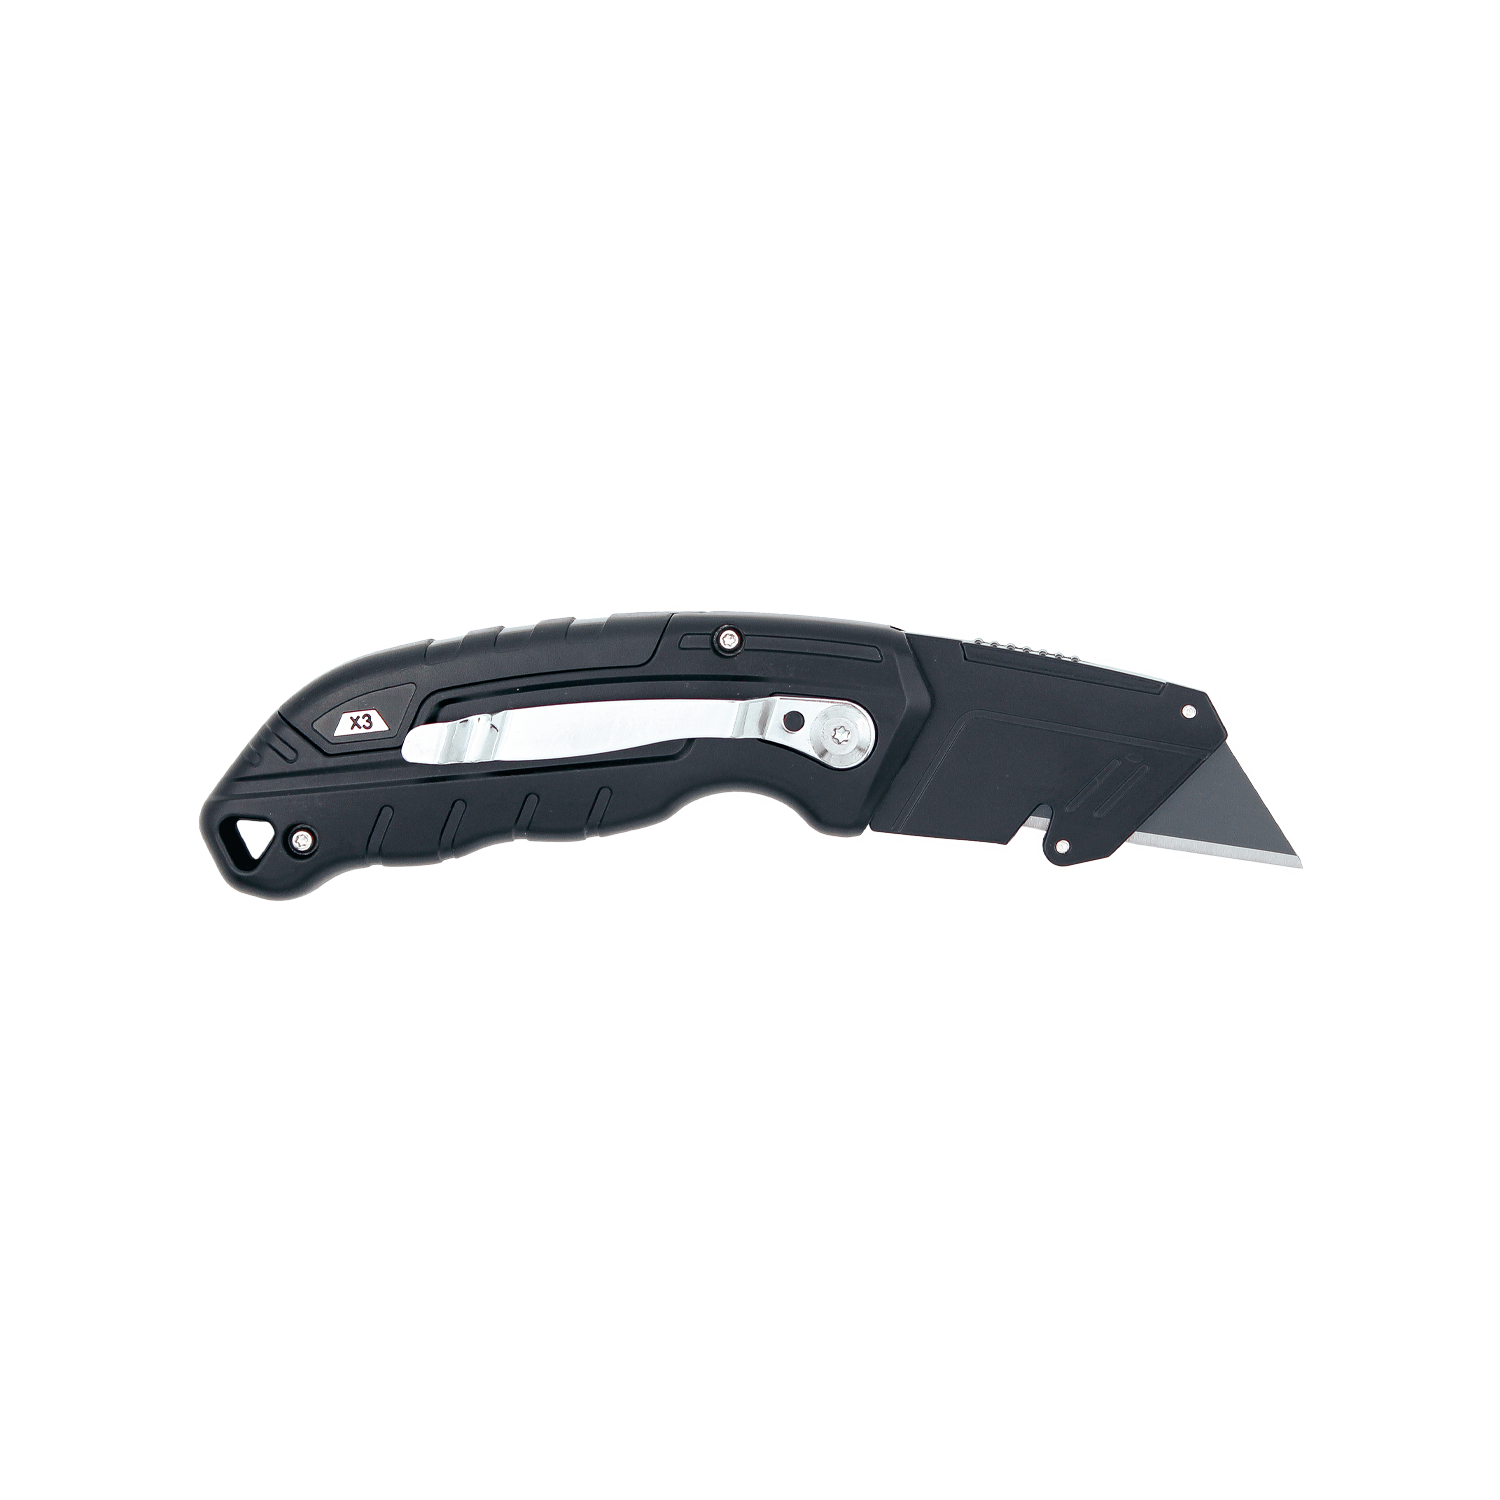 NORSE RazorTail Folding Knife